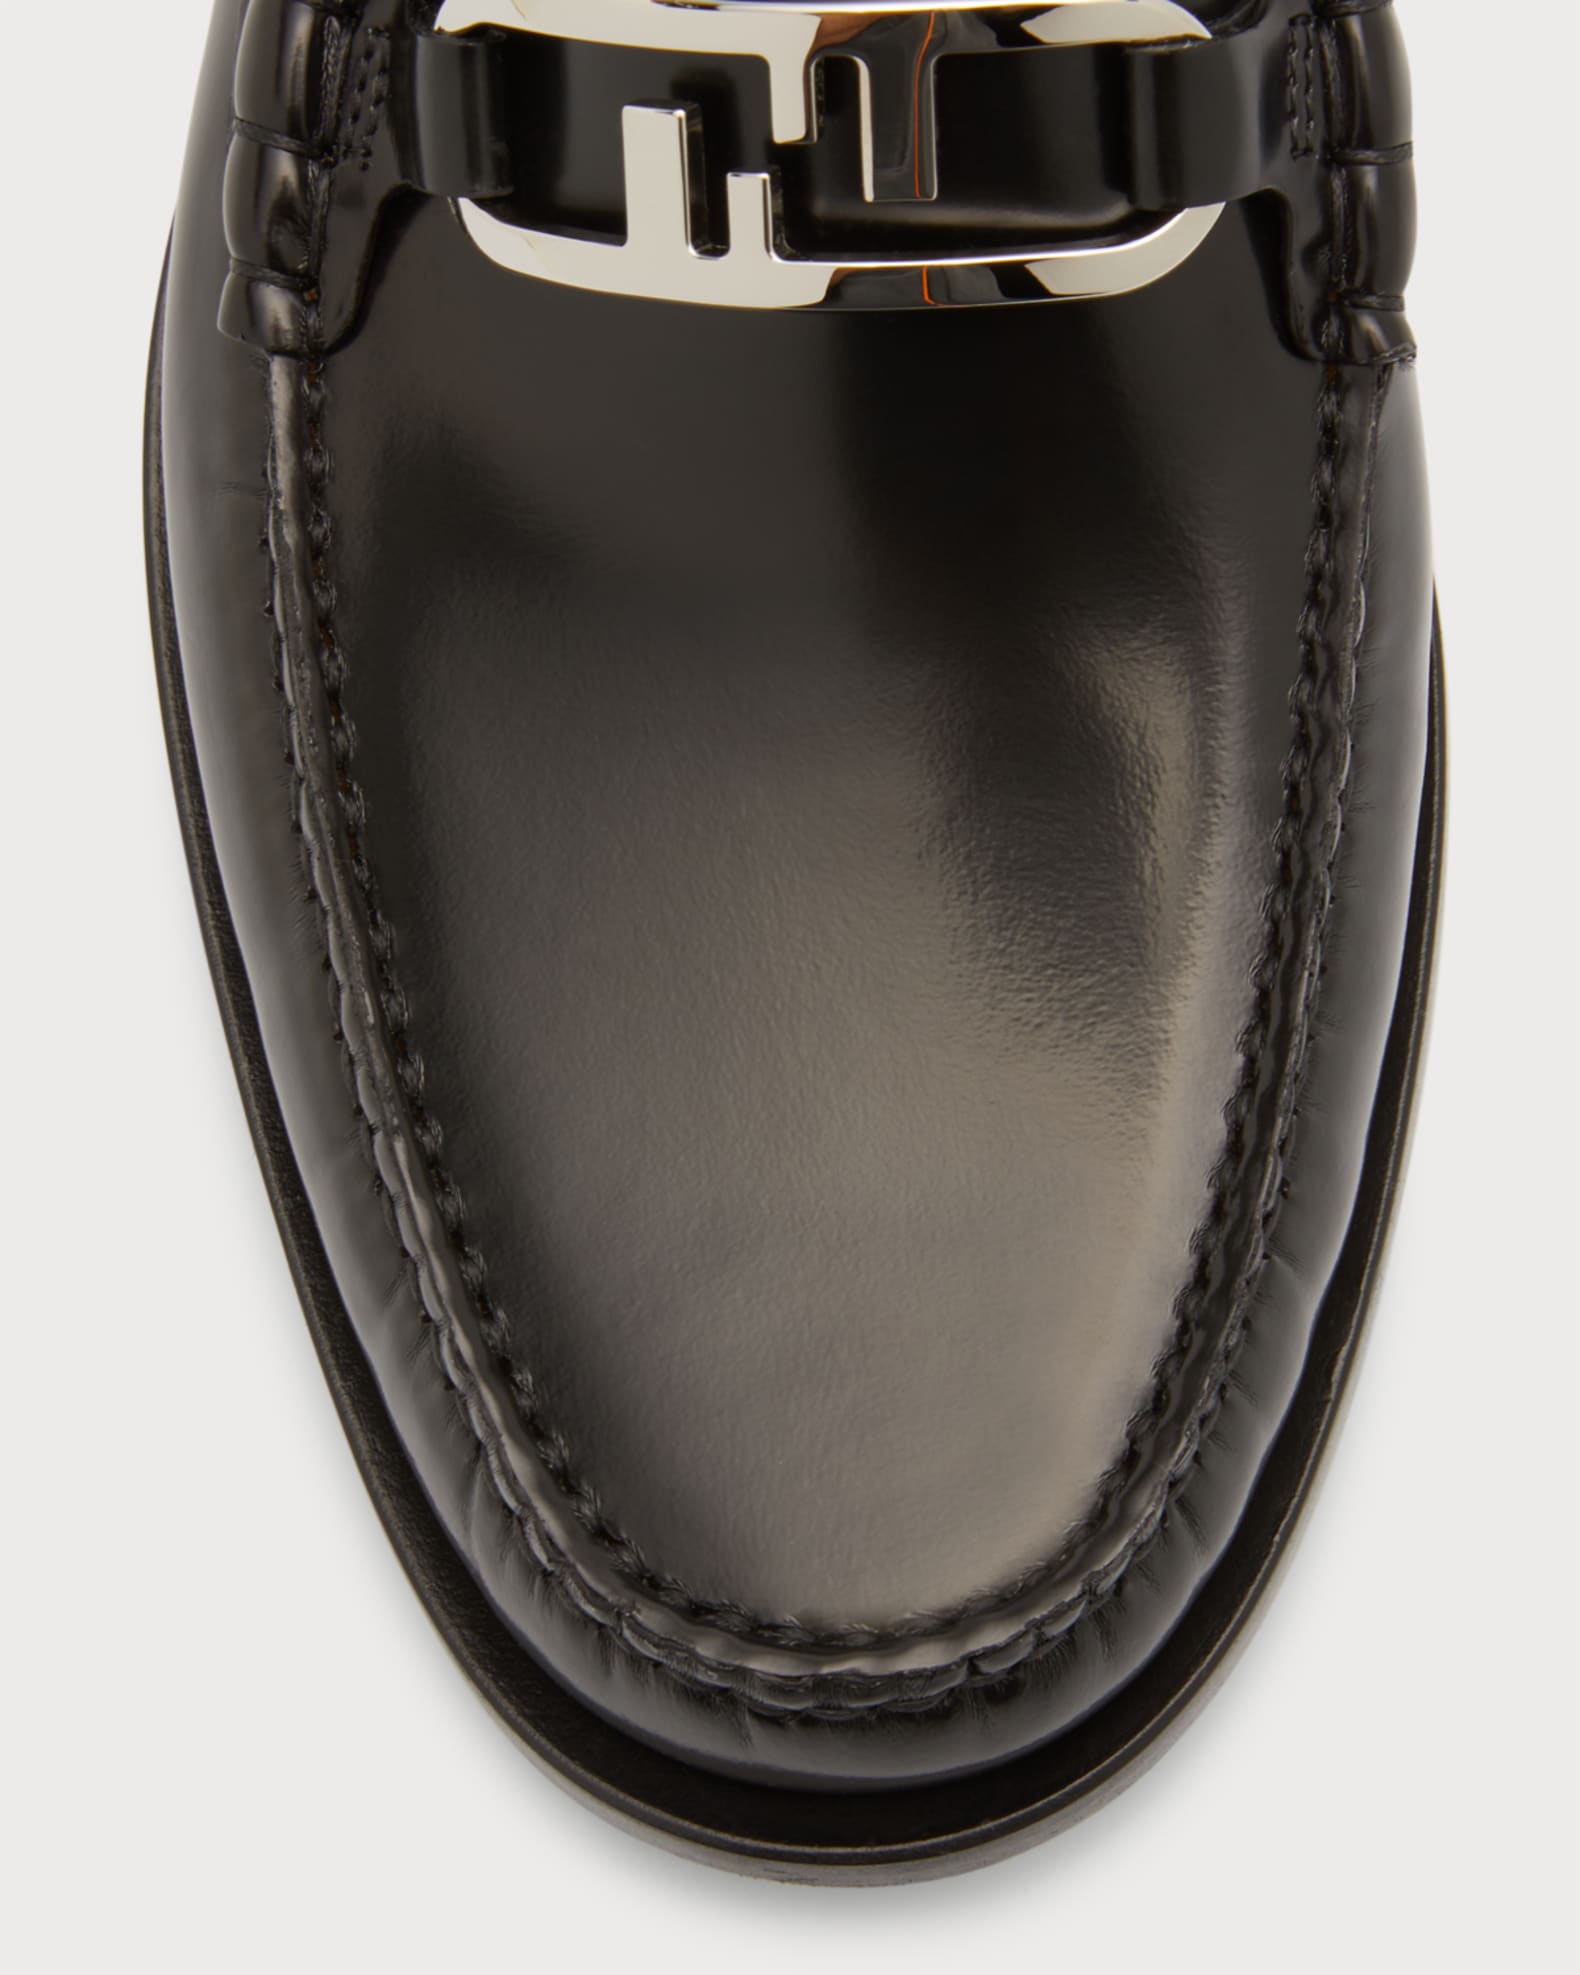 Fendi Men's Mocassino FF-Logo Bit Strap Leather Loafers | Neiman Marcus